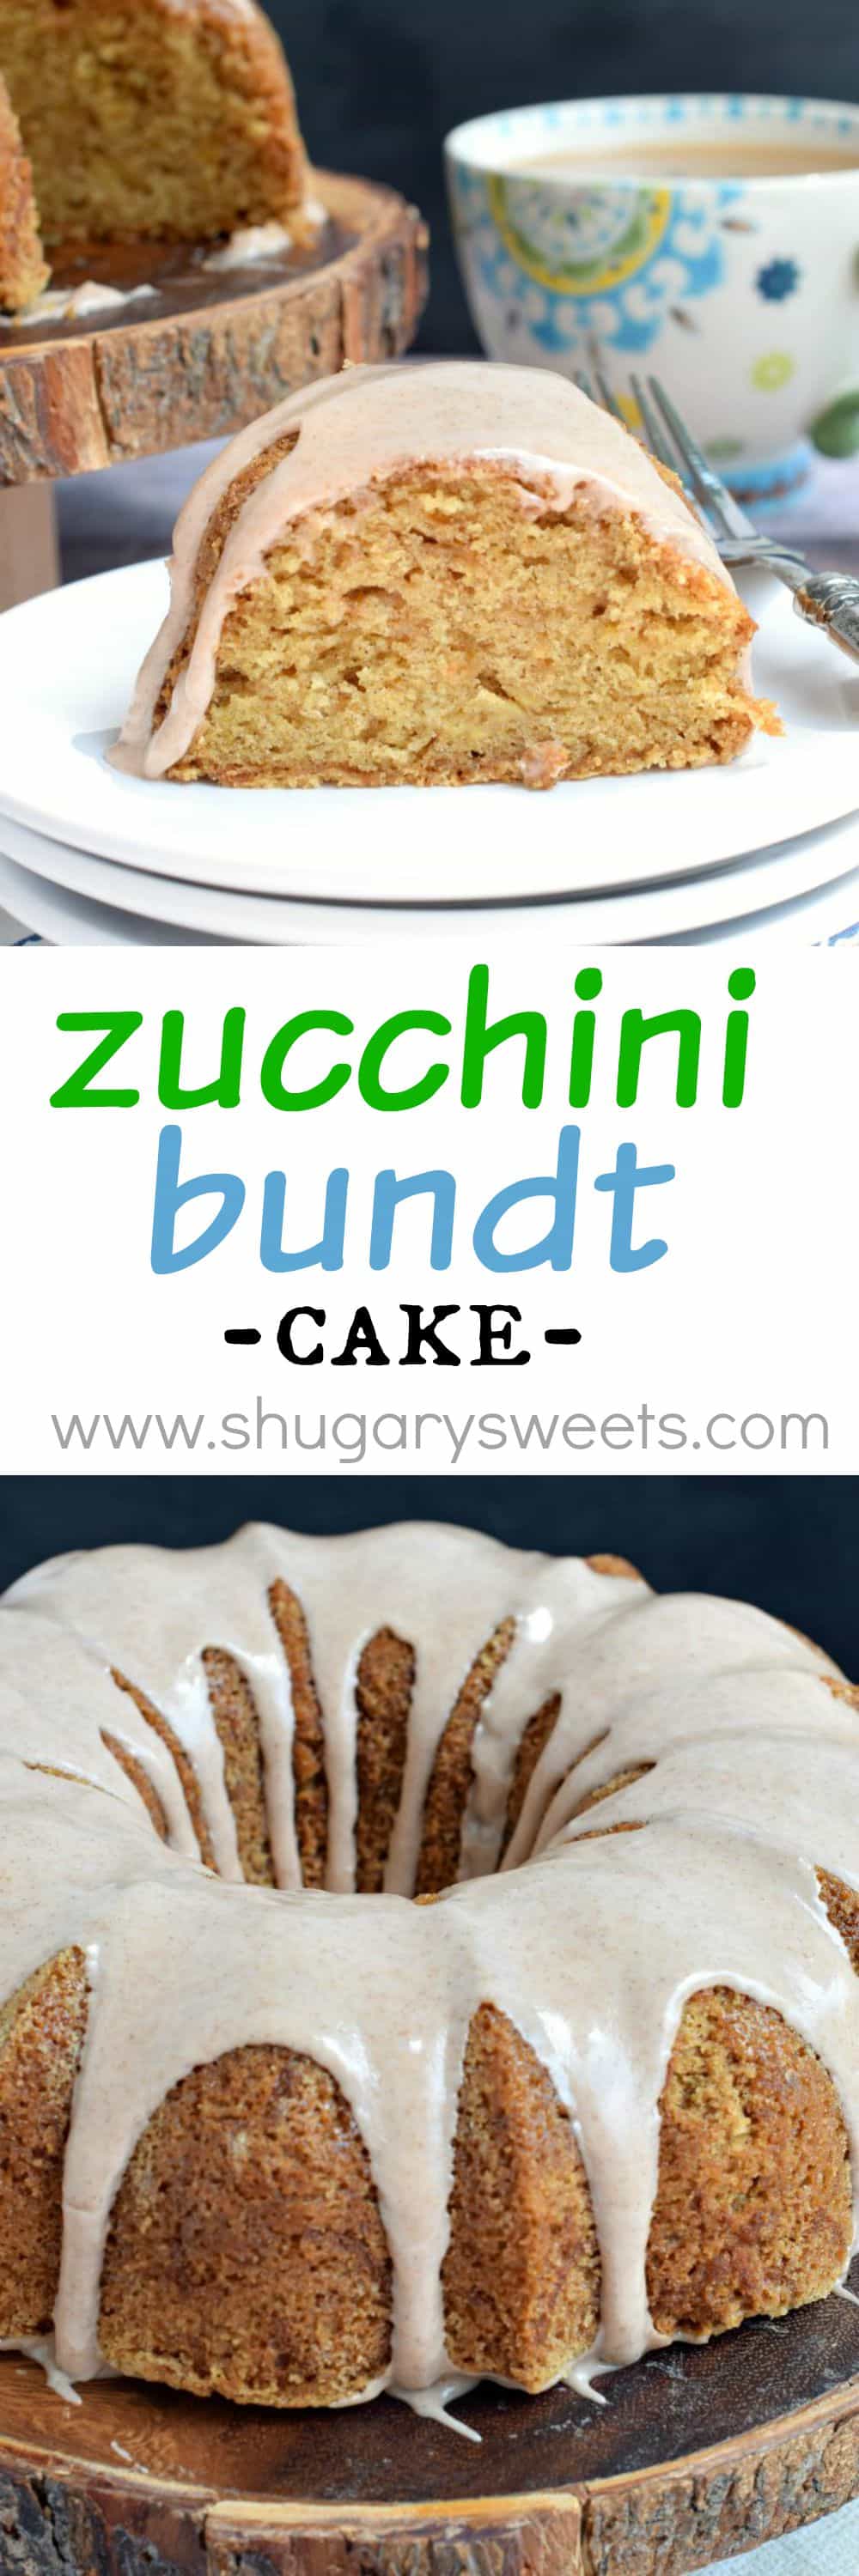 What are some good bundt cake glaze recipes?